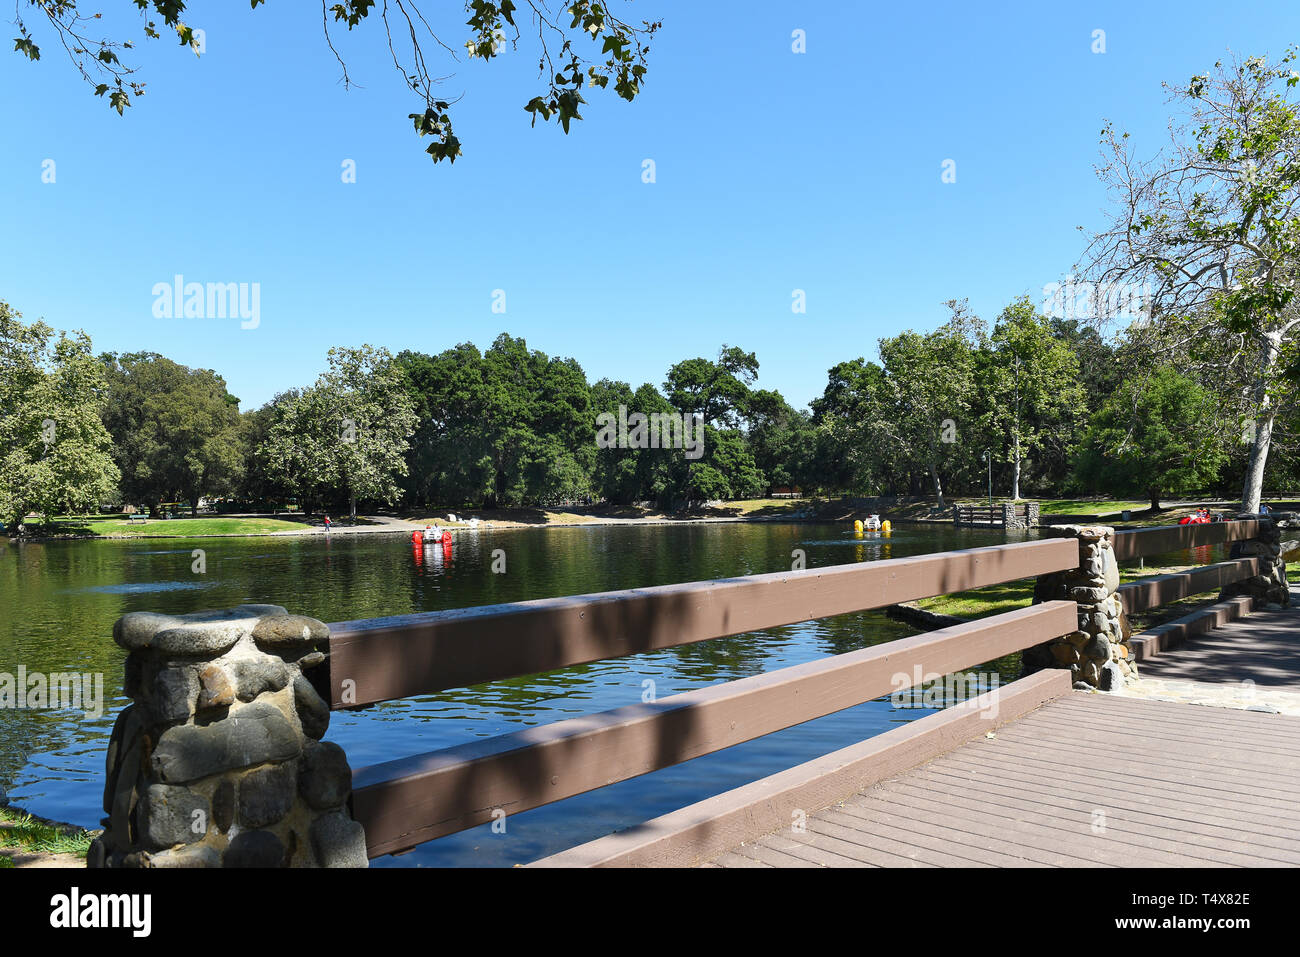 ORANGE, Kalifornien - 18. APRIL 2019: See in Irvine Park in Orange, Kalifornien, einem 160 Hektar großen Park wurde die countys, die erste regionale Park im Jahre 1897. Stockfoto